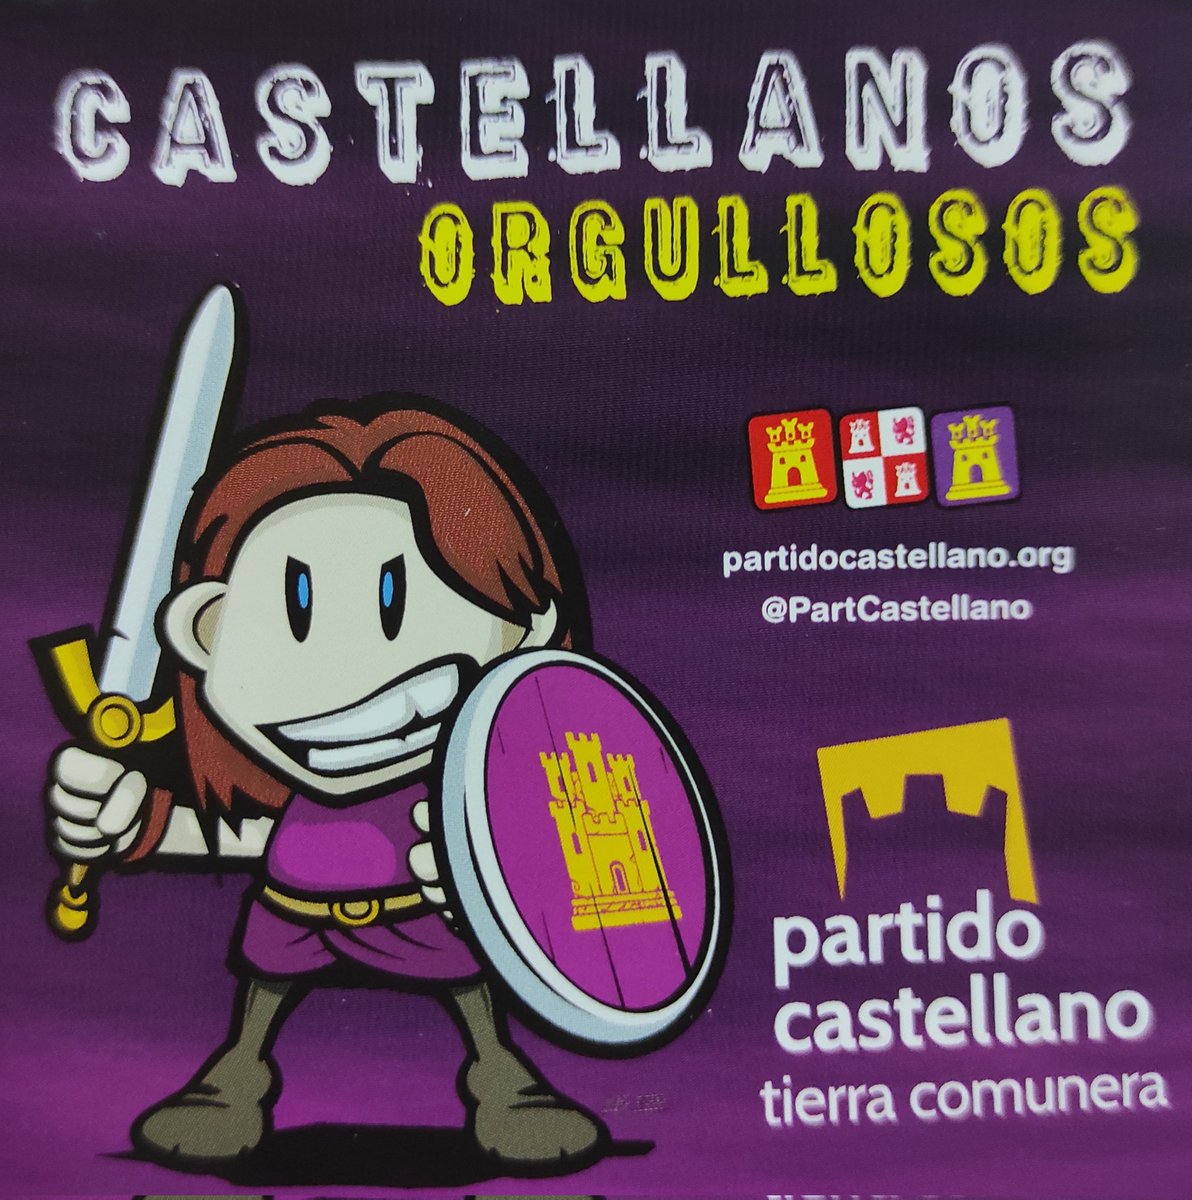 Orgullos@s de ser CASTELLAN@S 🌾

#CastillaNación #CastillaComunera